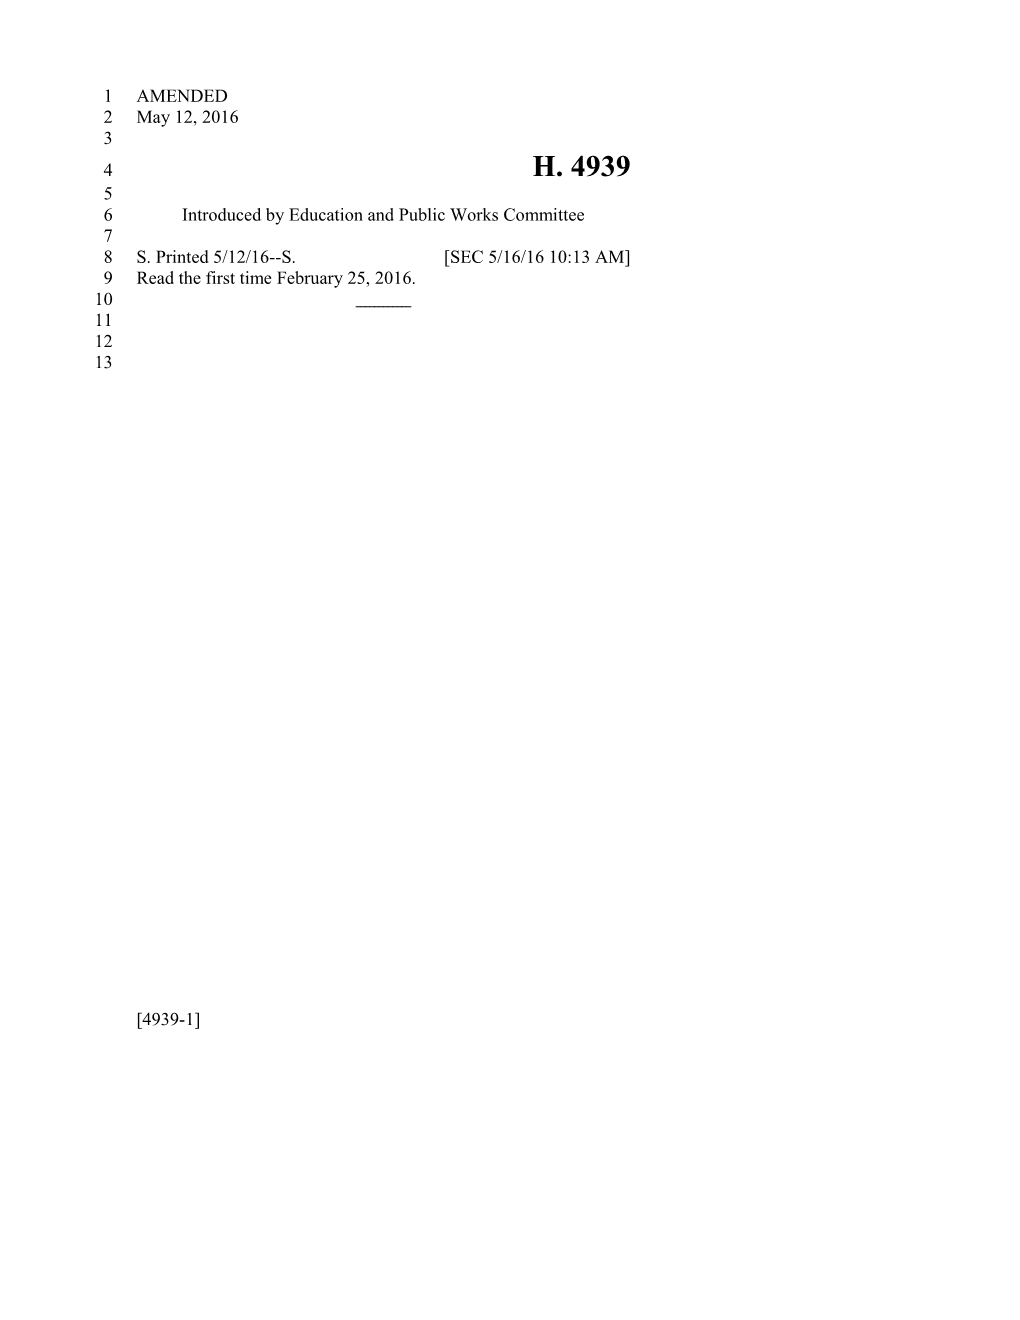 2015-2016 Bill 4939 Text of Previous Version (May 16, 2016) - South Carolina Legislature Online